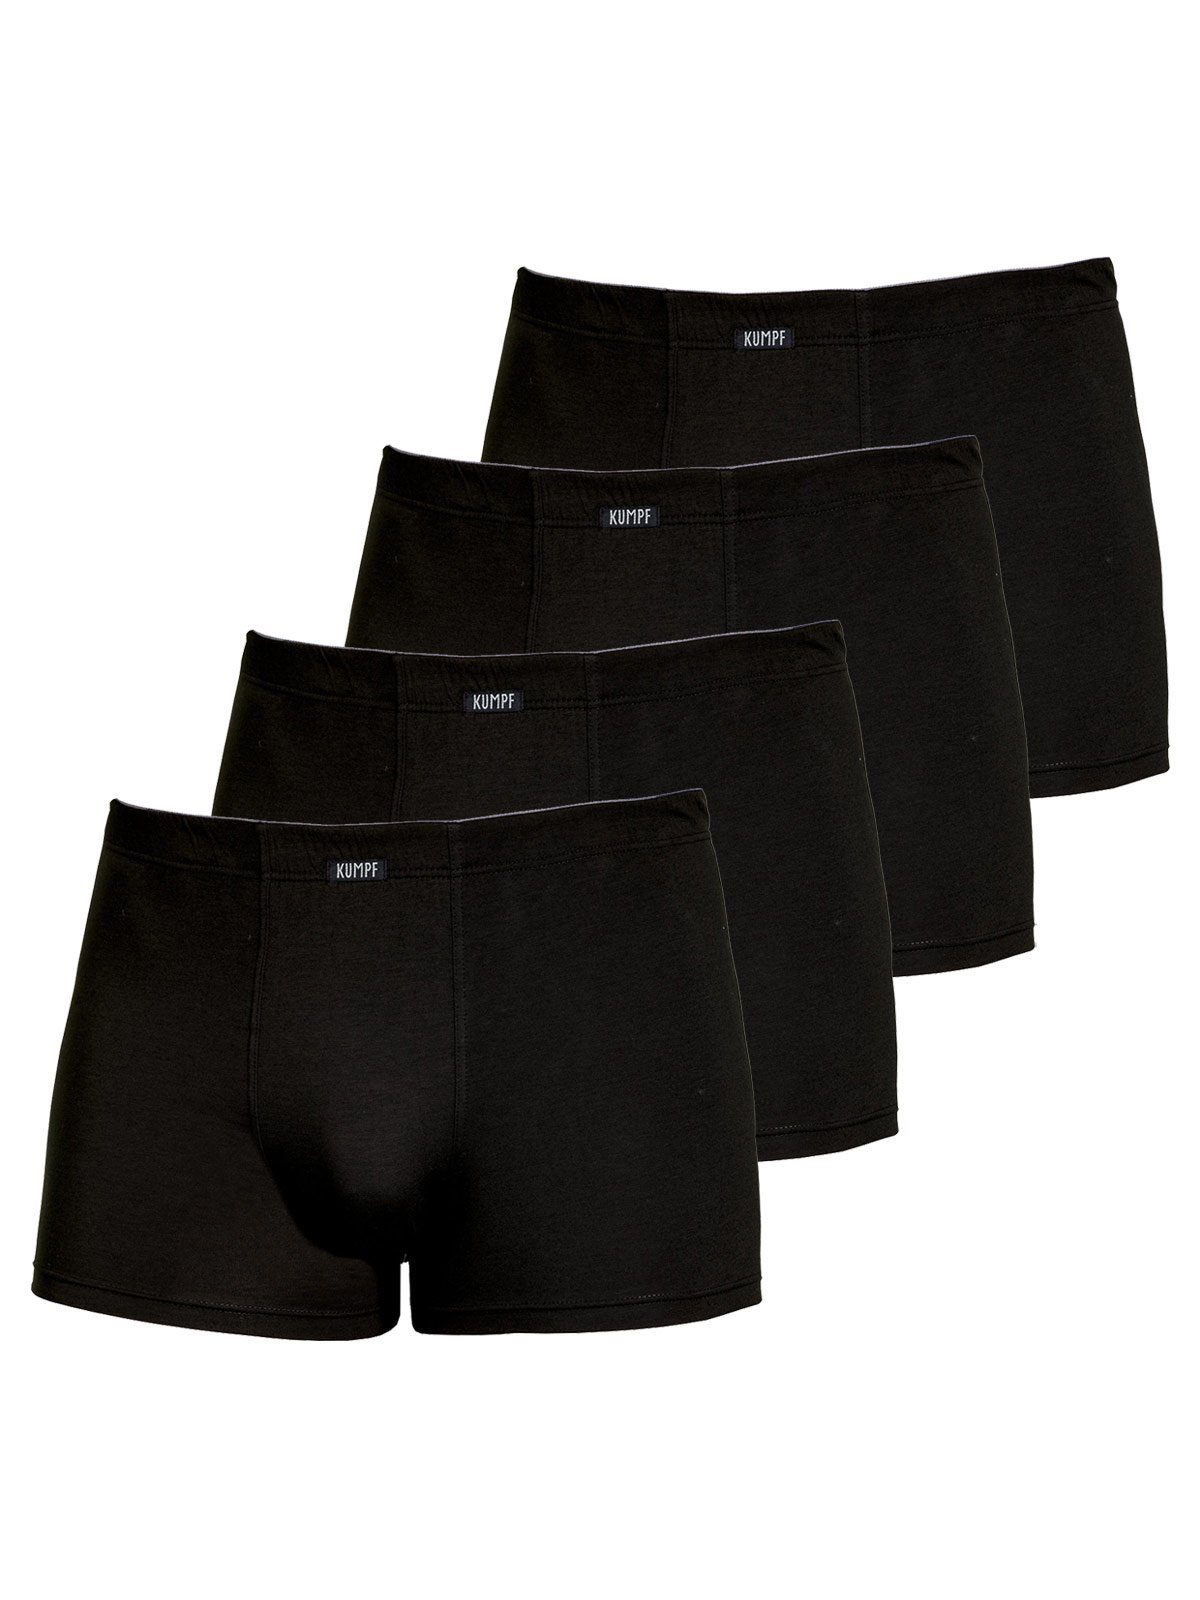 Materialmix KUMPF Pants (Spar-Set, 4-St) Single Sparpack Retro Jersey Pants 4er Herren schwarz